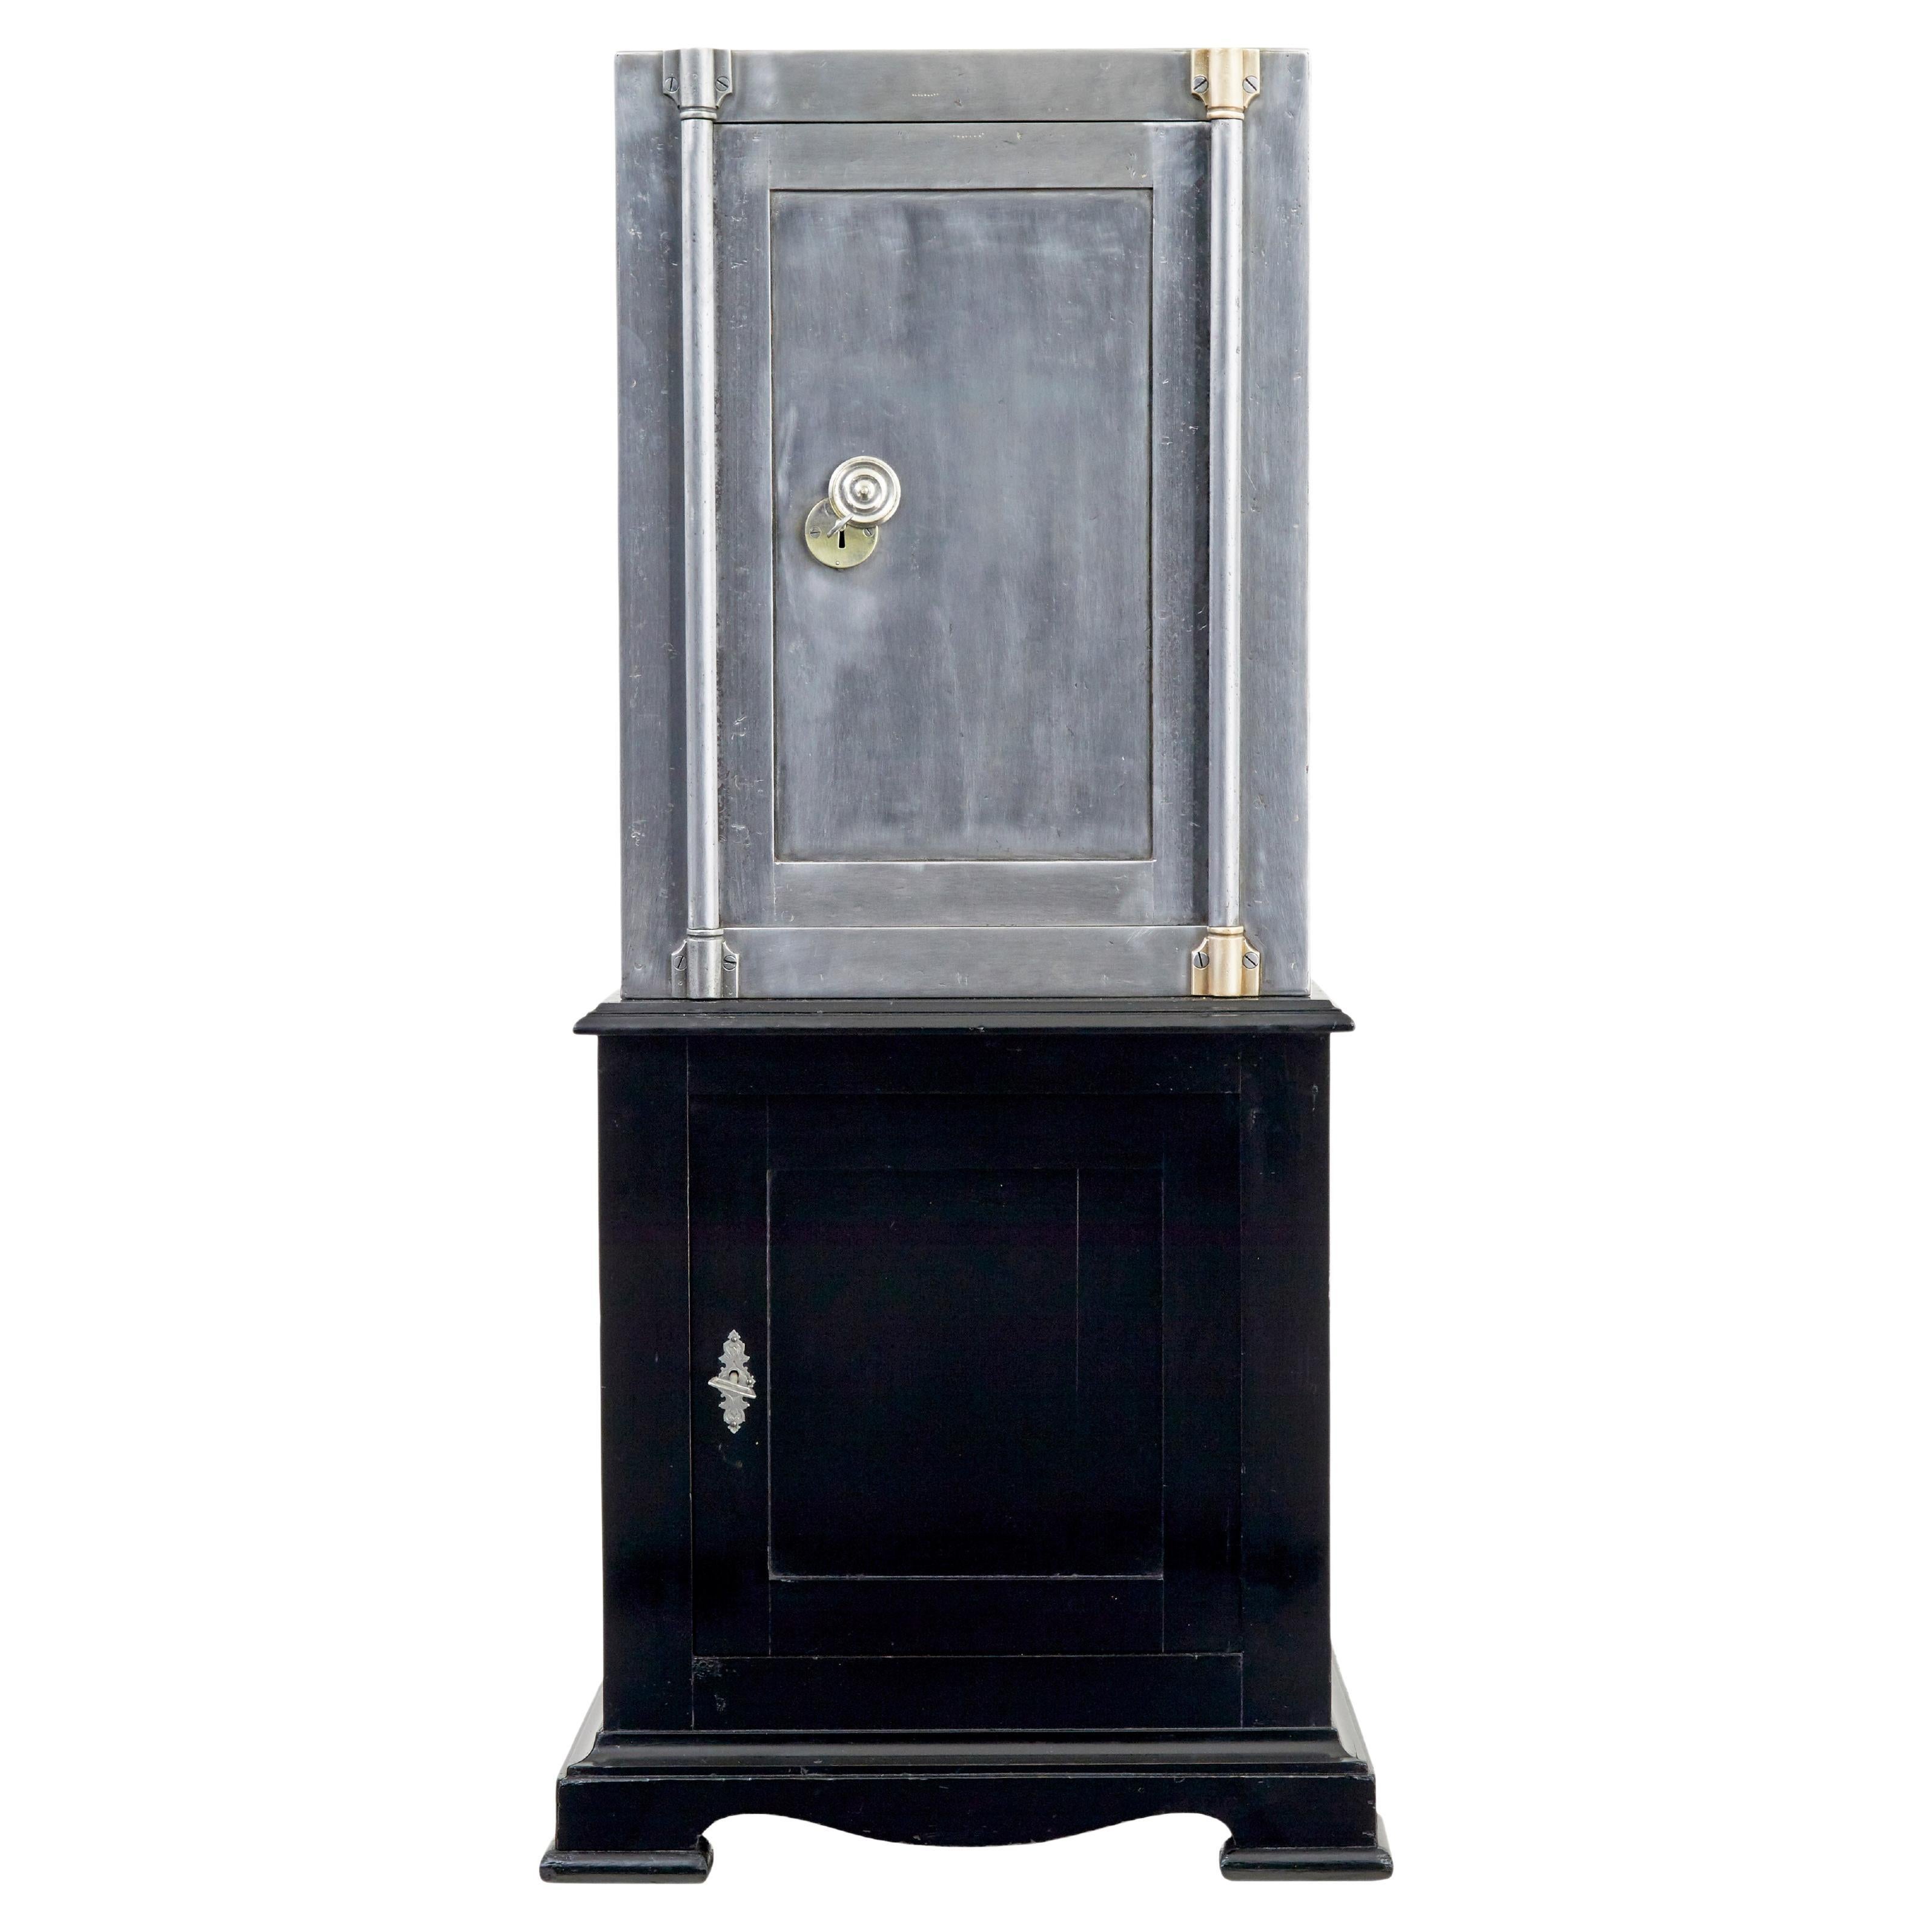 19th century Danish polished steel safe on cabinet For Sale